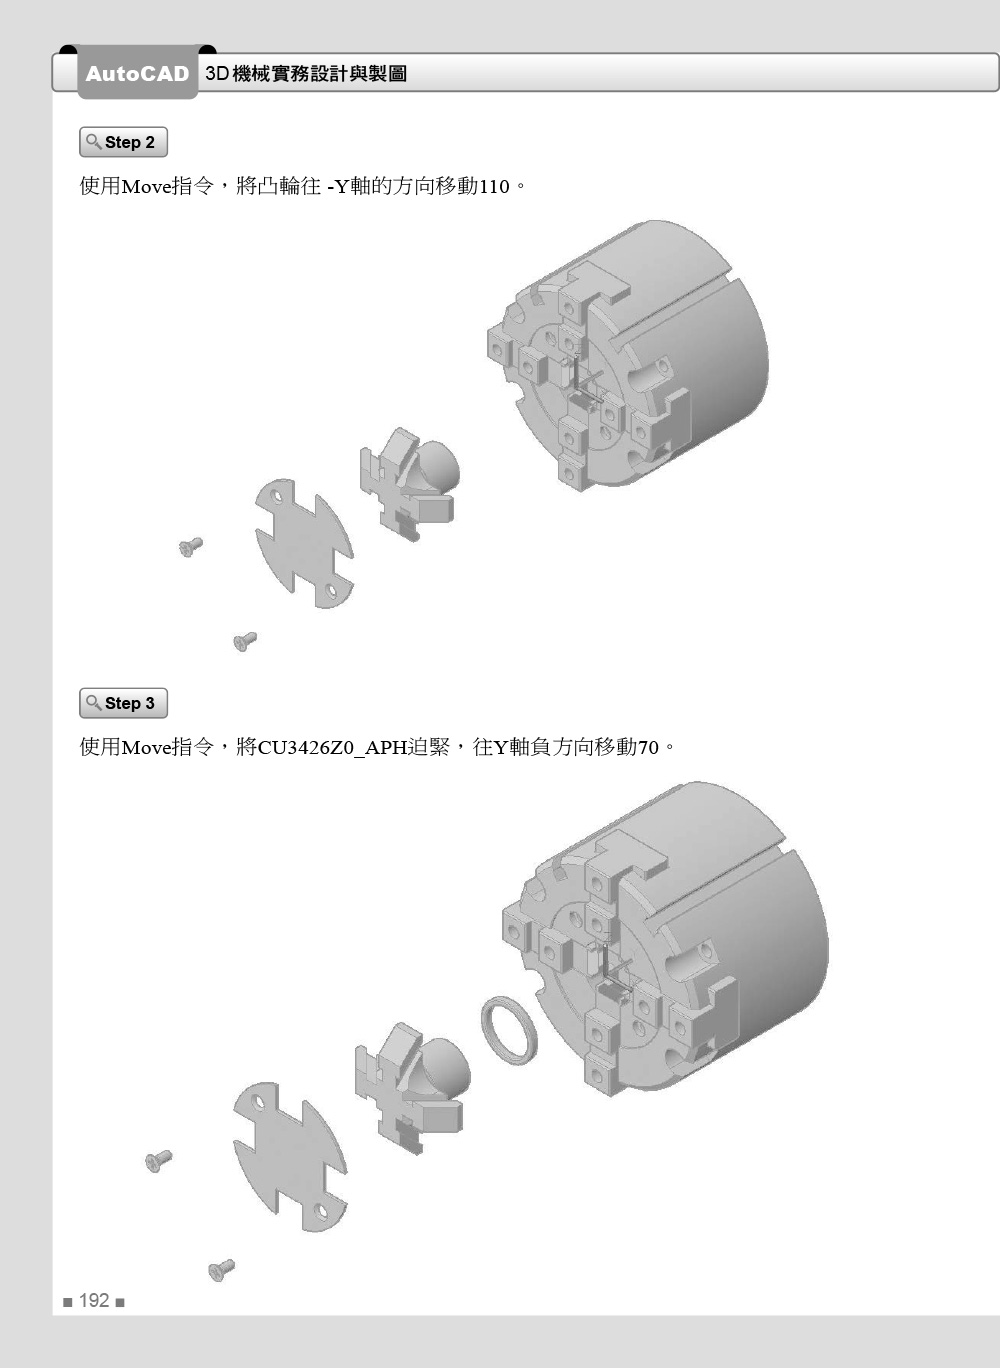 ►GO►最新優惠► 【書籍】AutoCAD 3D機械實務設計與製圖